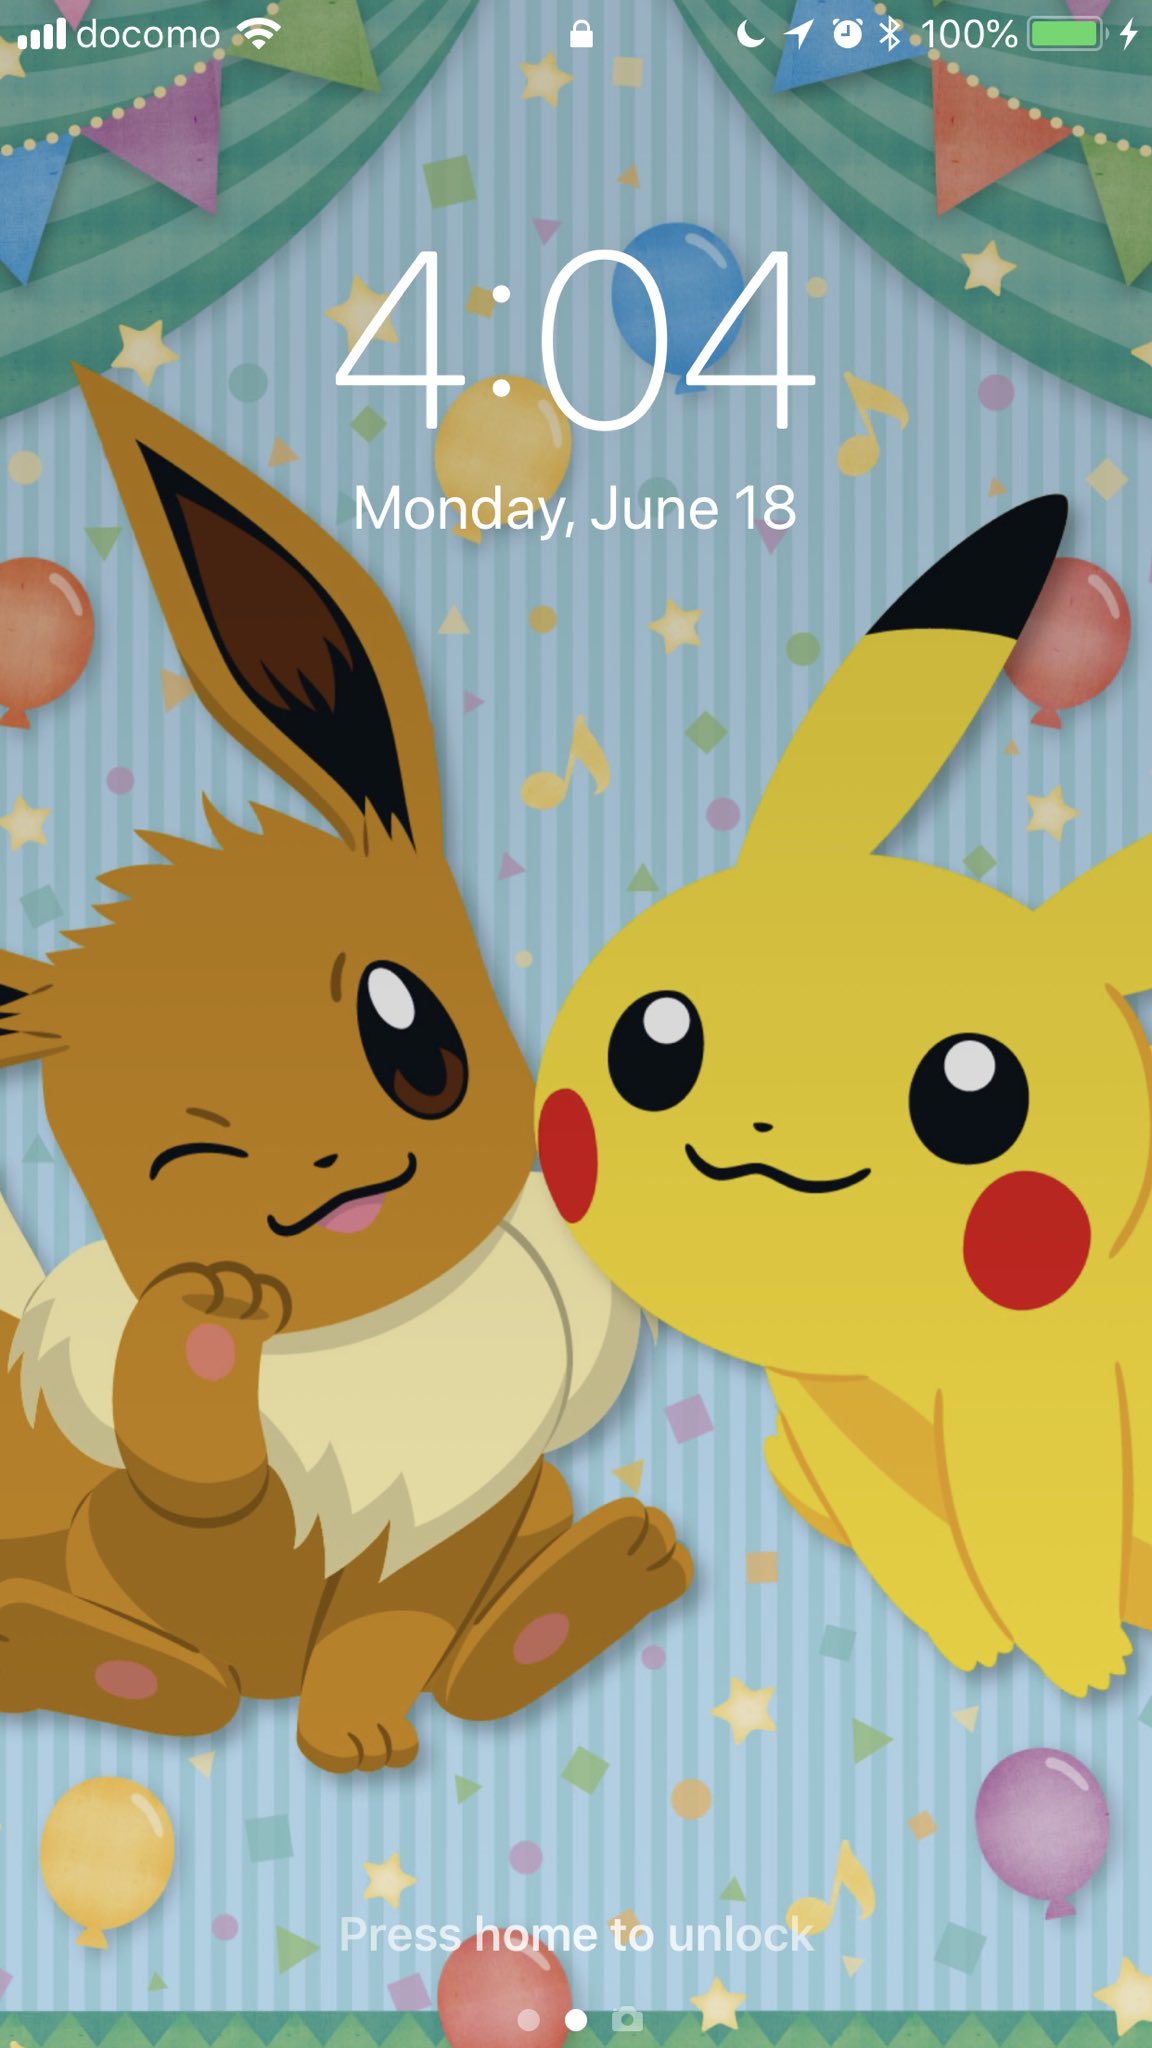 Yozon V Twitter ロック画面の壁紙を新しくしました イーブイとピカチュウ が超可愛いぃ めちゃくちゃ気に入りました Pokemonletsgo ポケモン Nintendo Pokemon T Co 9eyxdrtoj6 Twitter